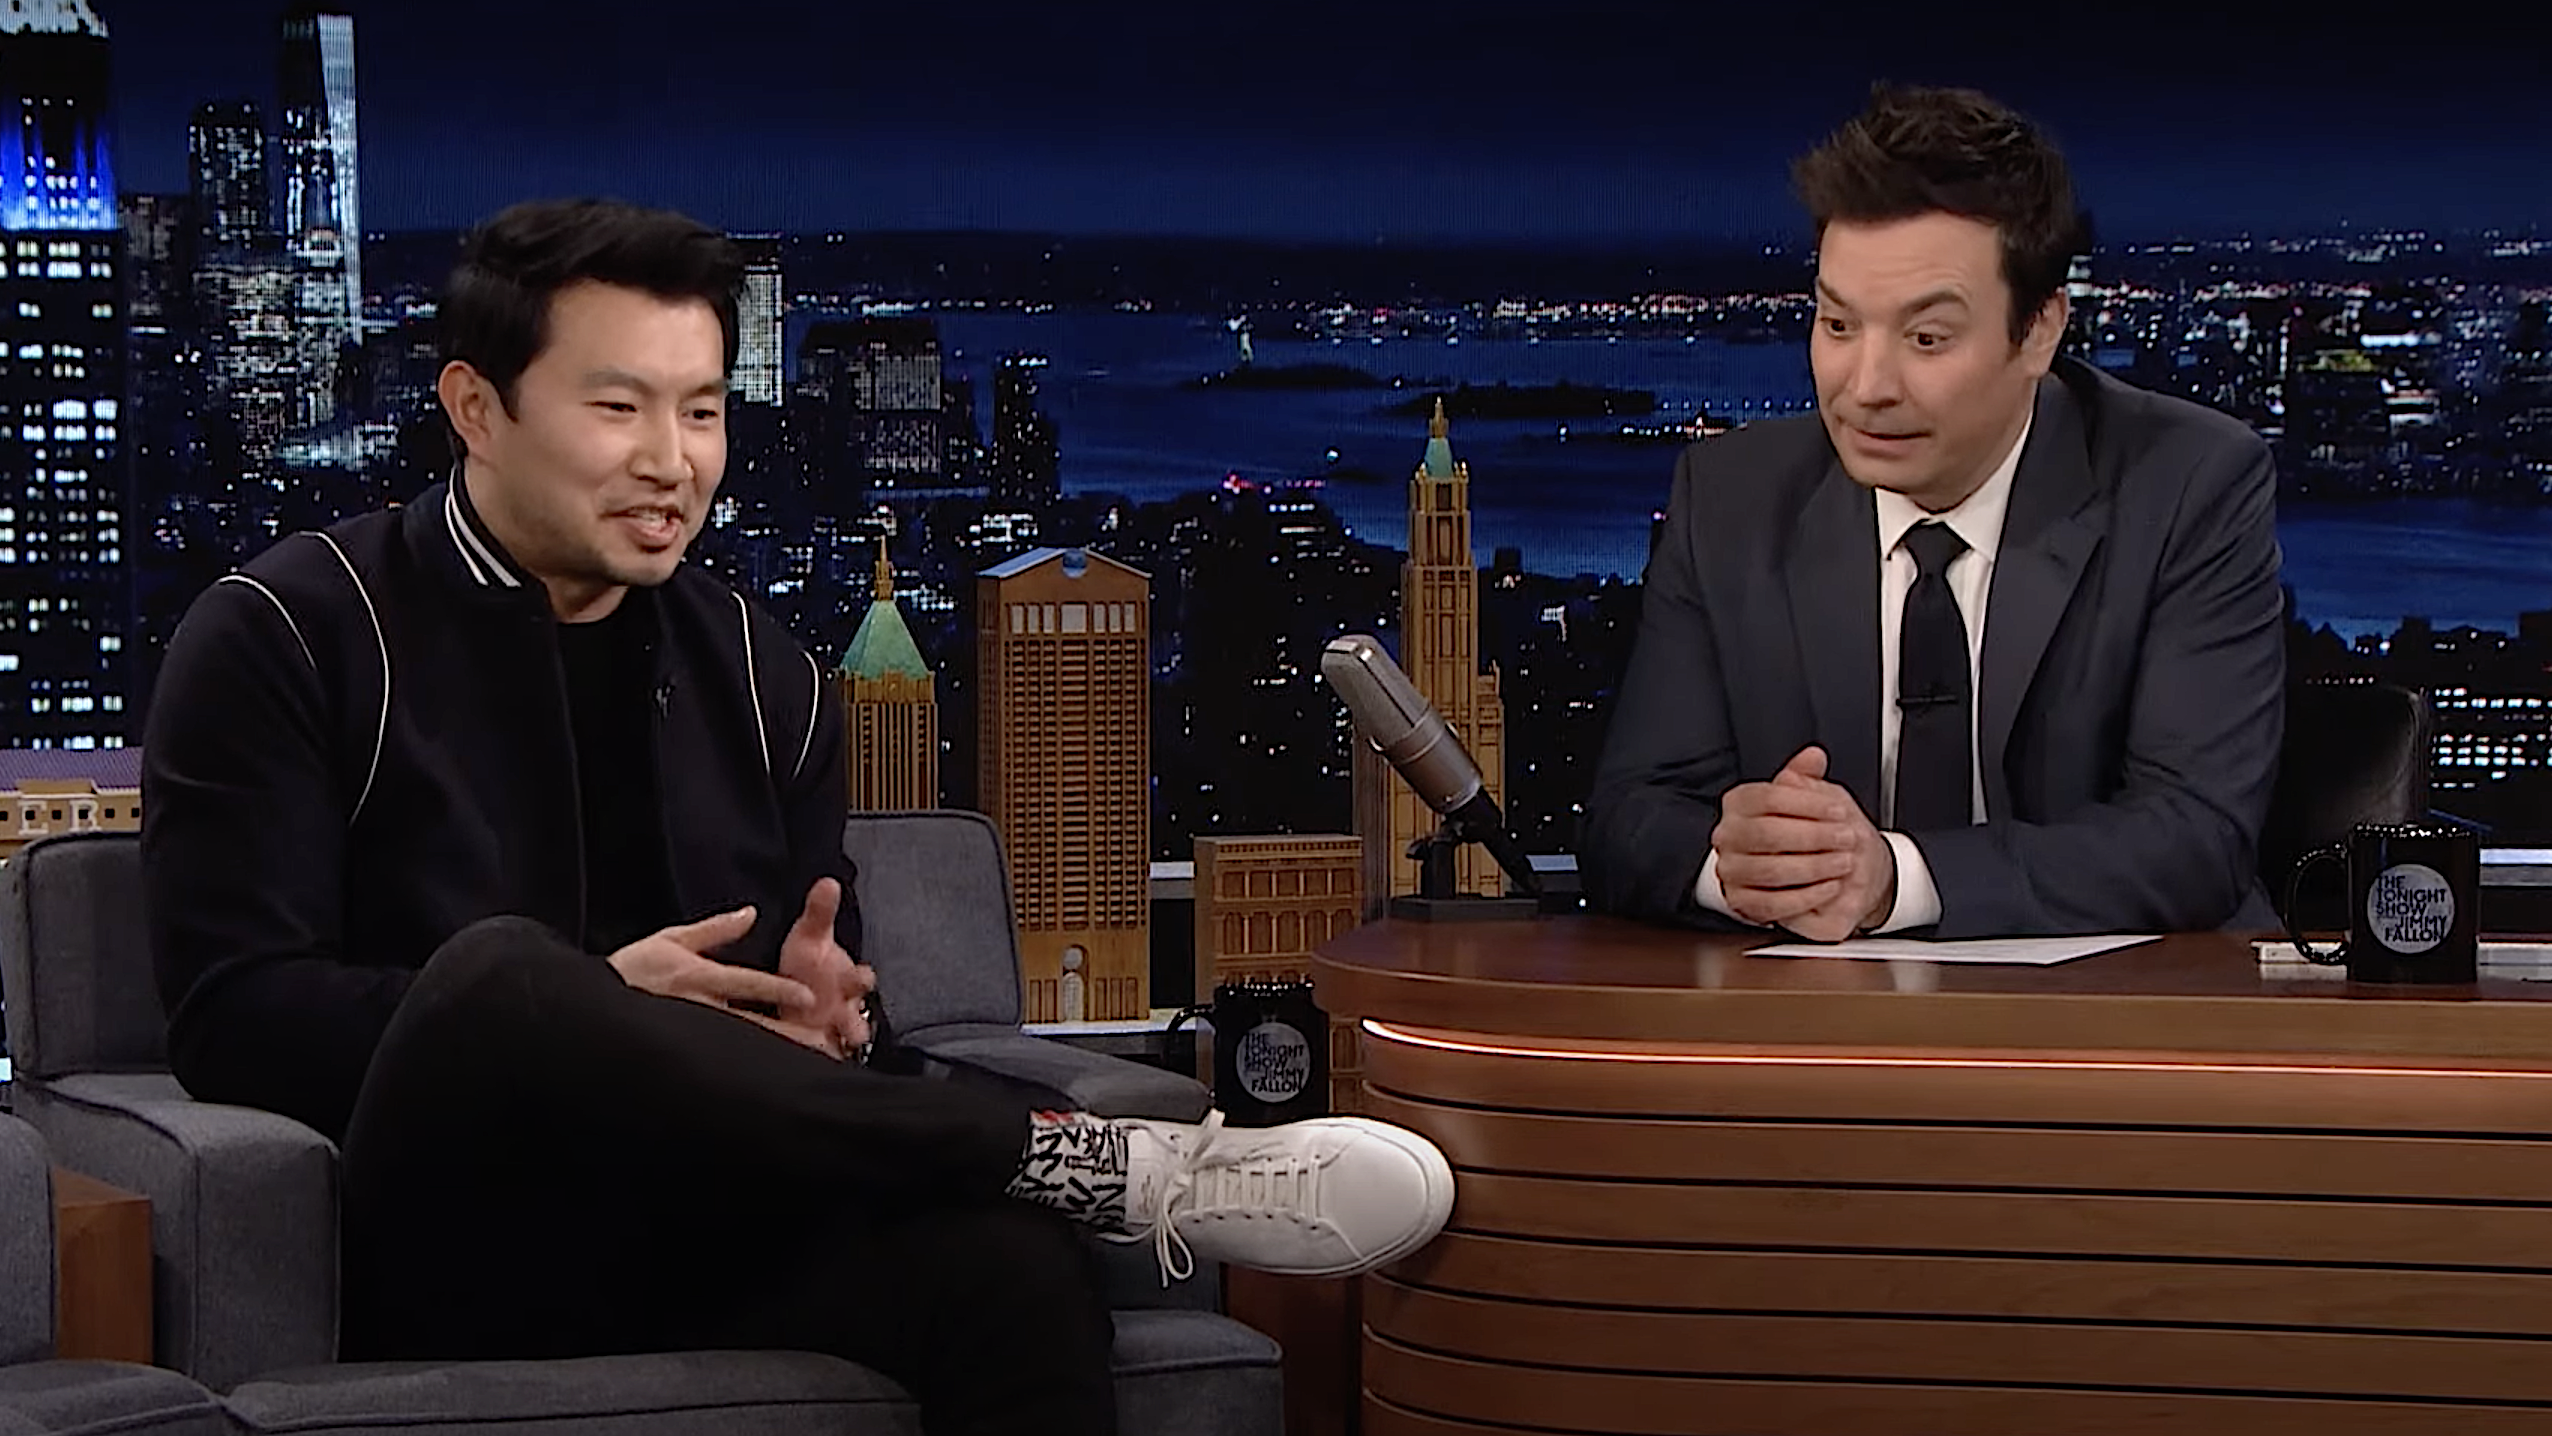 Simu Liu shows Jimmy Fallon his unfairly rejected Saturday Night Live impressions